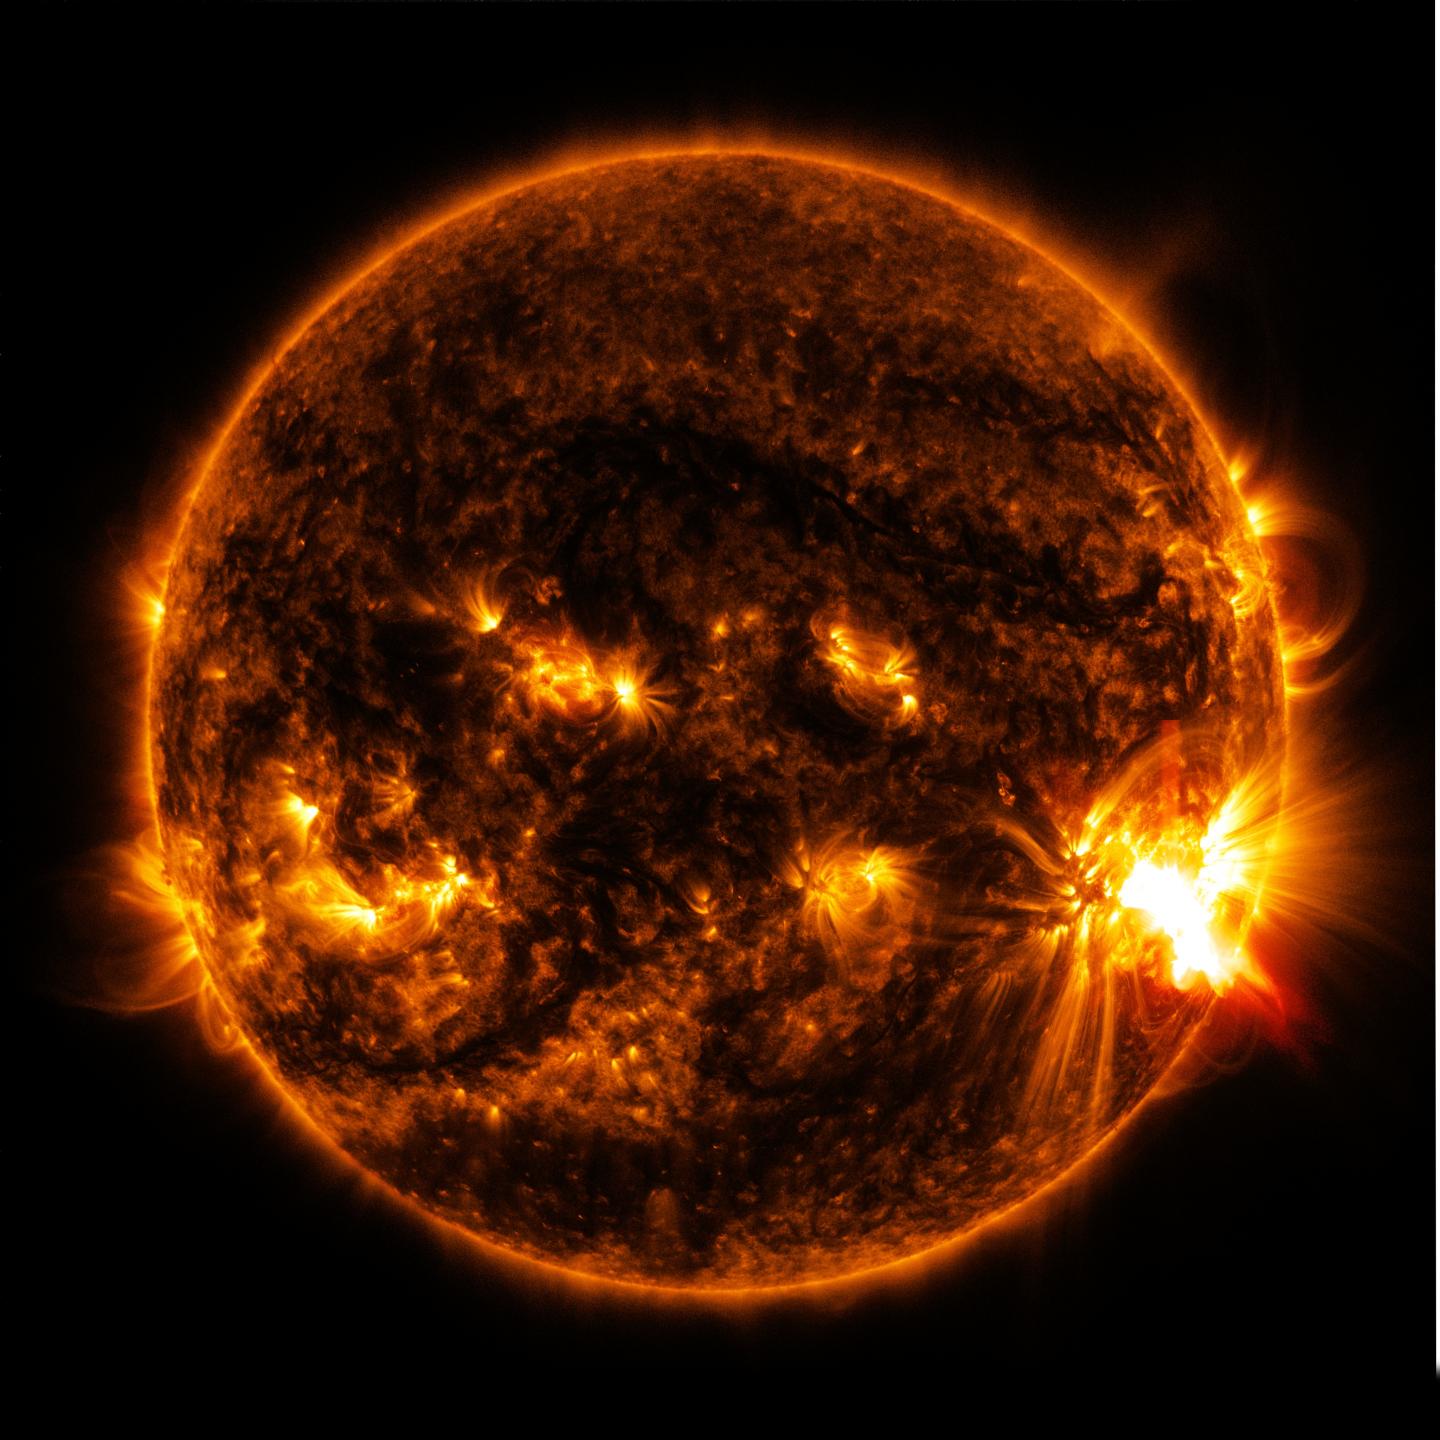 NASA's SDO Observes More Flares Erupting from Giant Sunspot